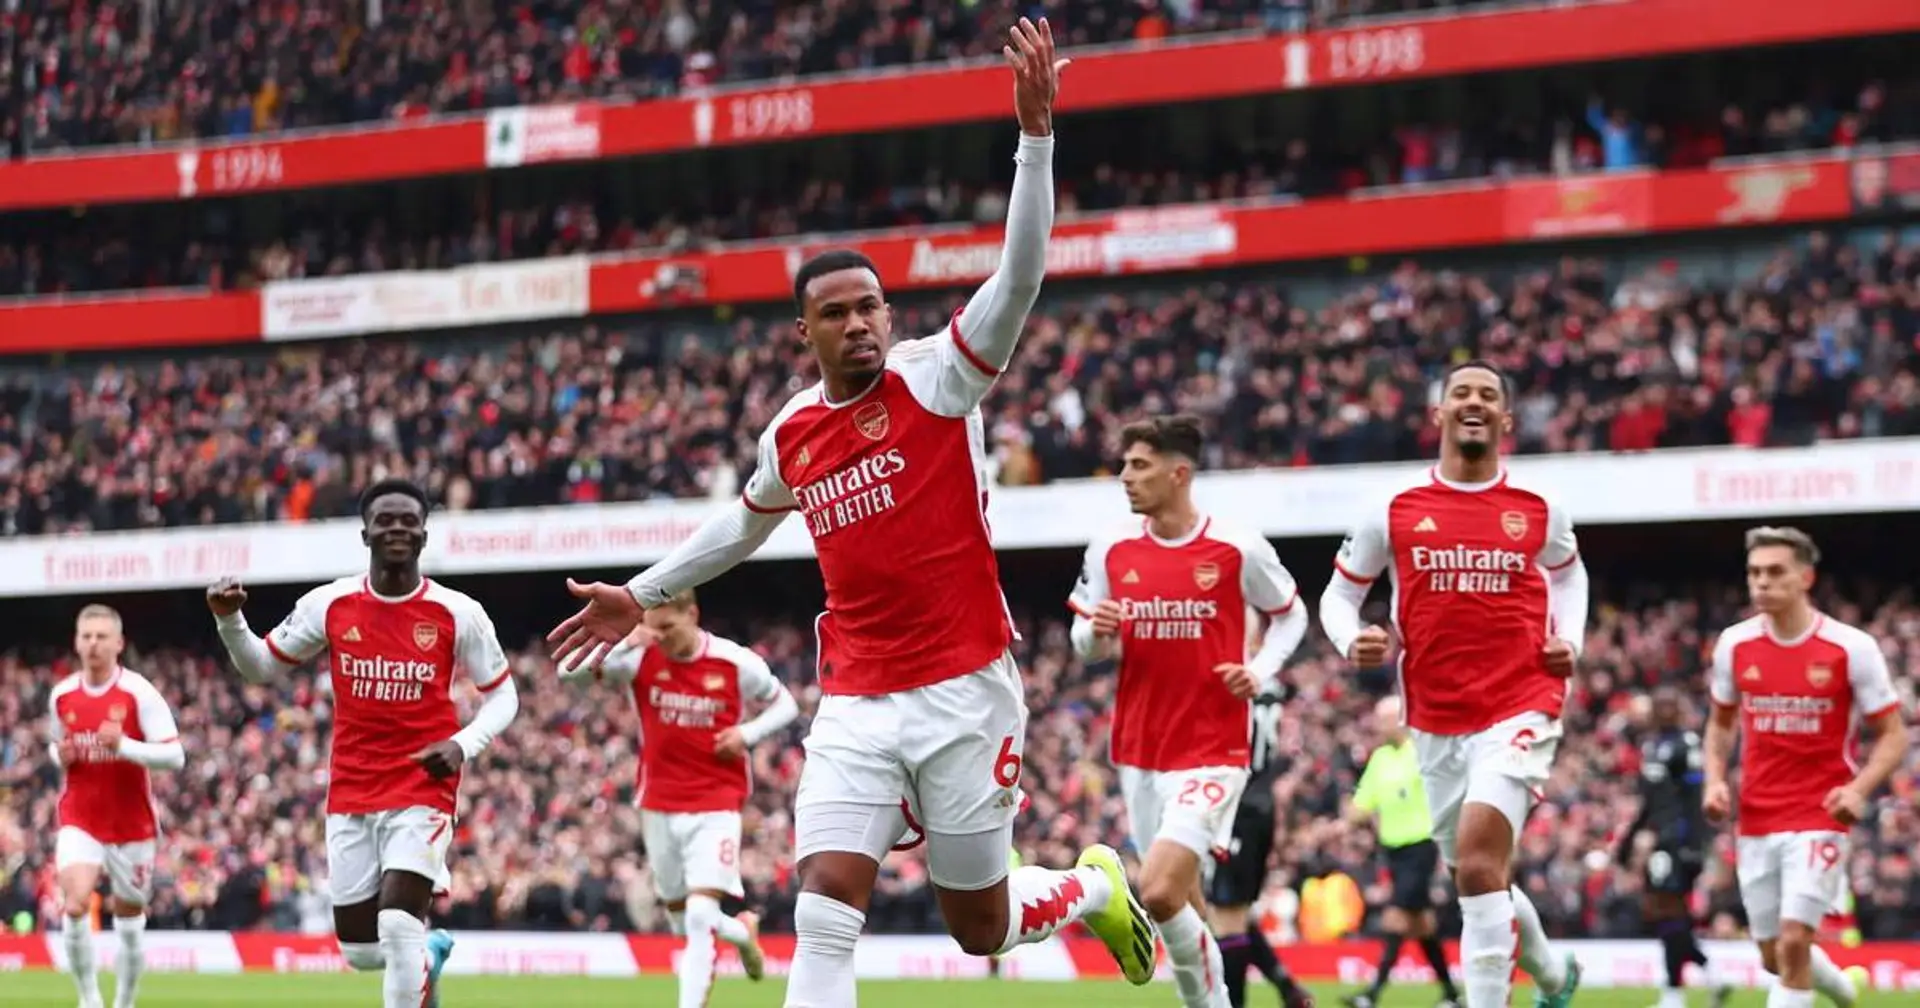 Gabriel - 9.5, Saka - 6: Rating Arsenal players in Crystal Palace win